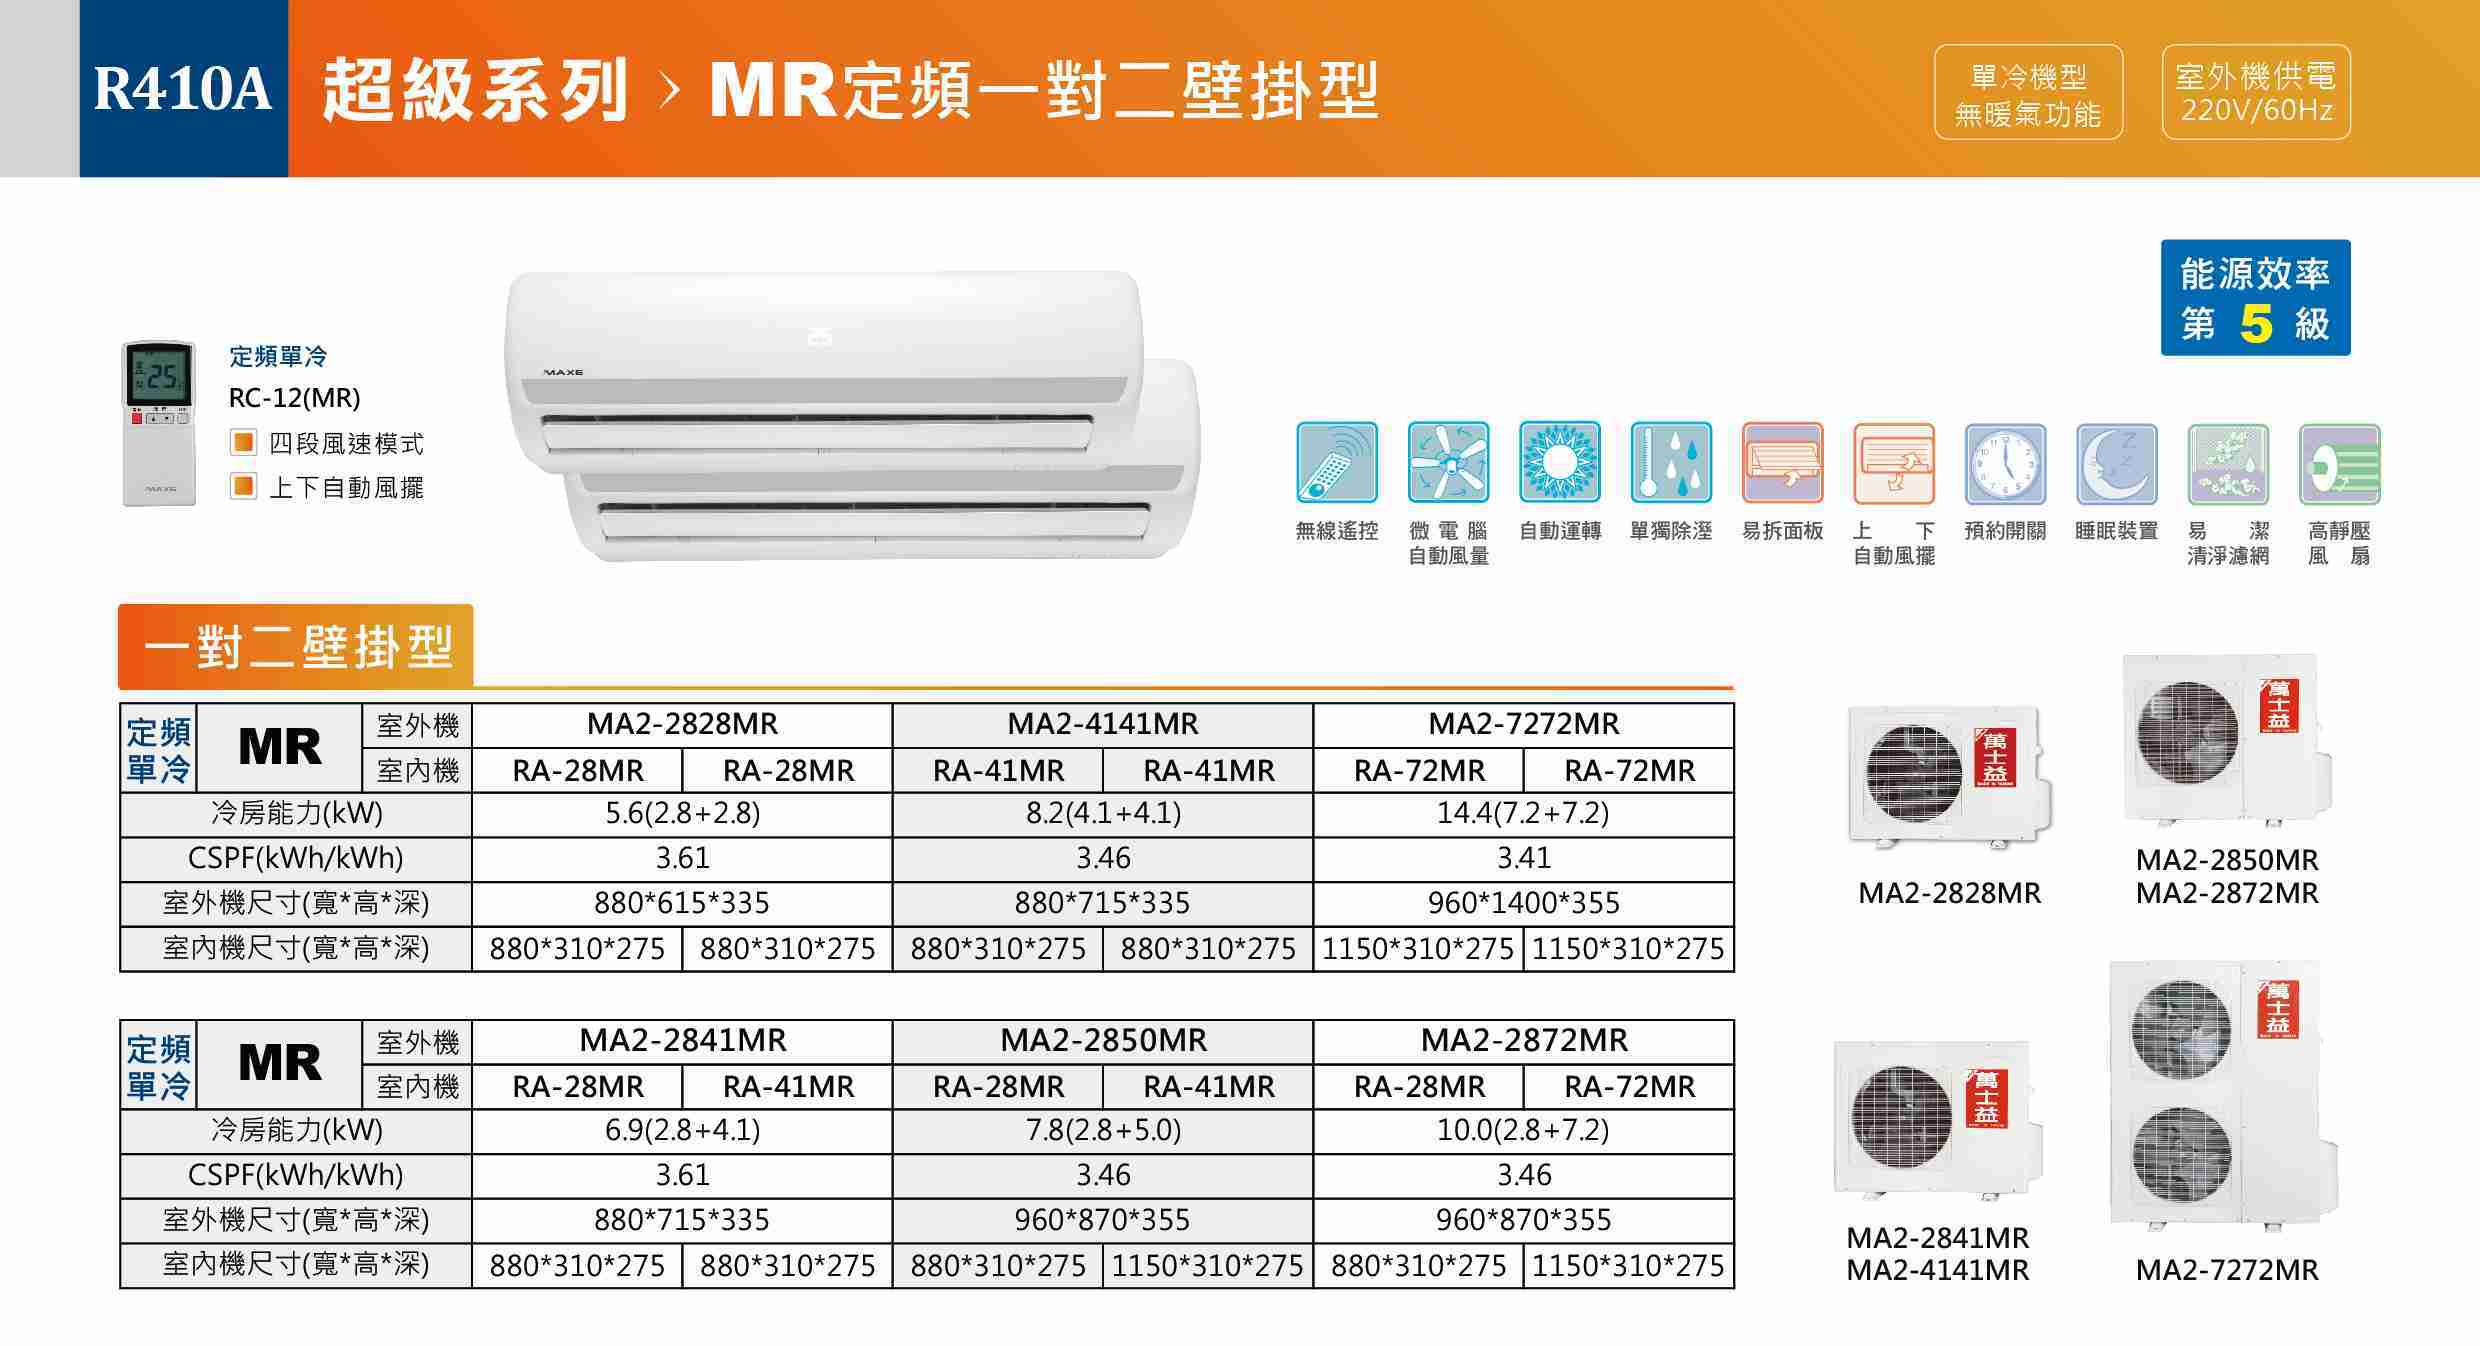 【MAXE 萬士益】壁掛式冷氣 一對二 一對多 定頻冷專室外機 MA2-5050MR (客服詢問客訂區下單)